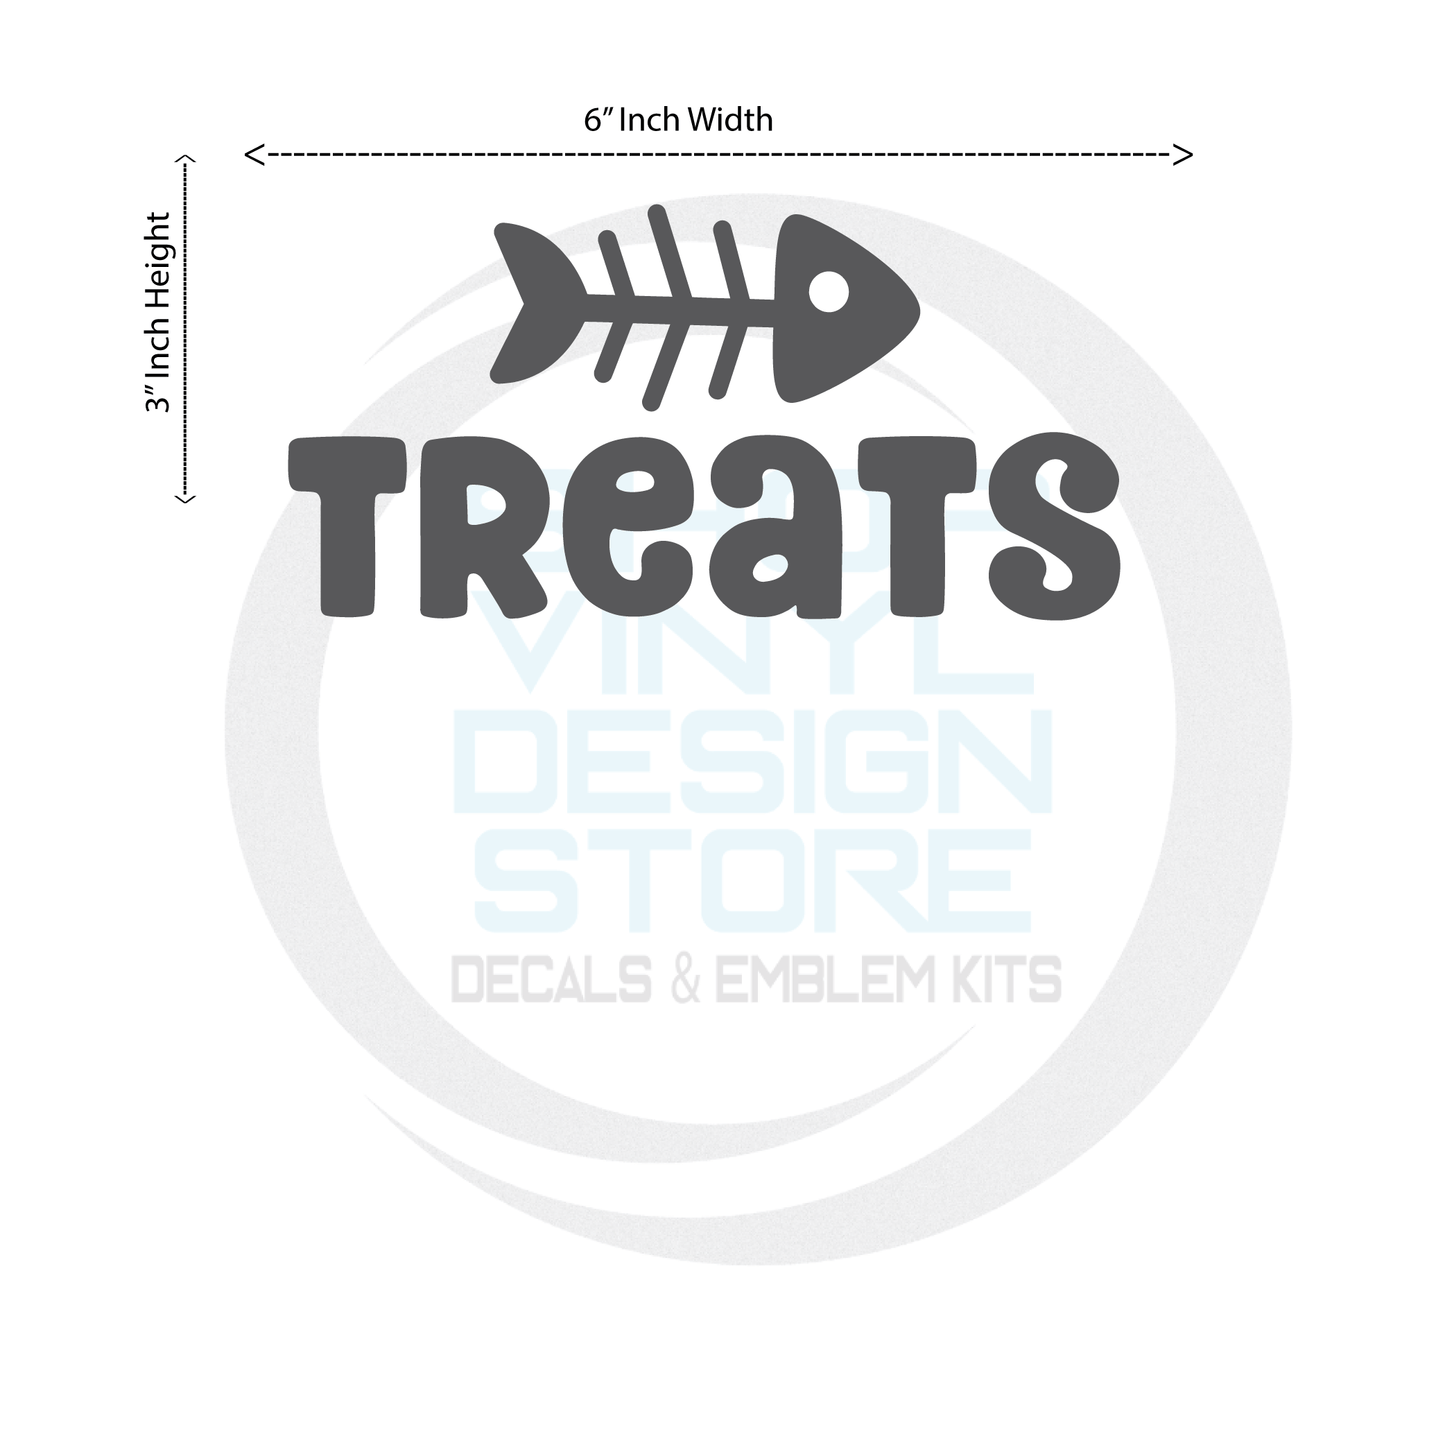 ShopVinylDesignStore.com Treats with Fish Bone Wide 6"W x 3"H Shop Vinyl Design decals stickers